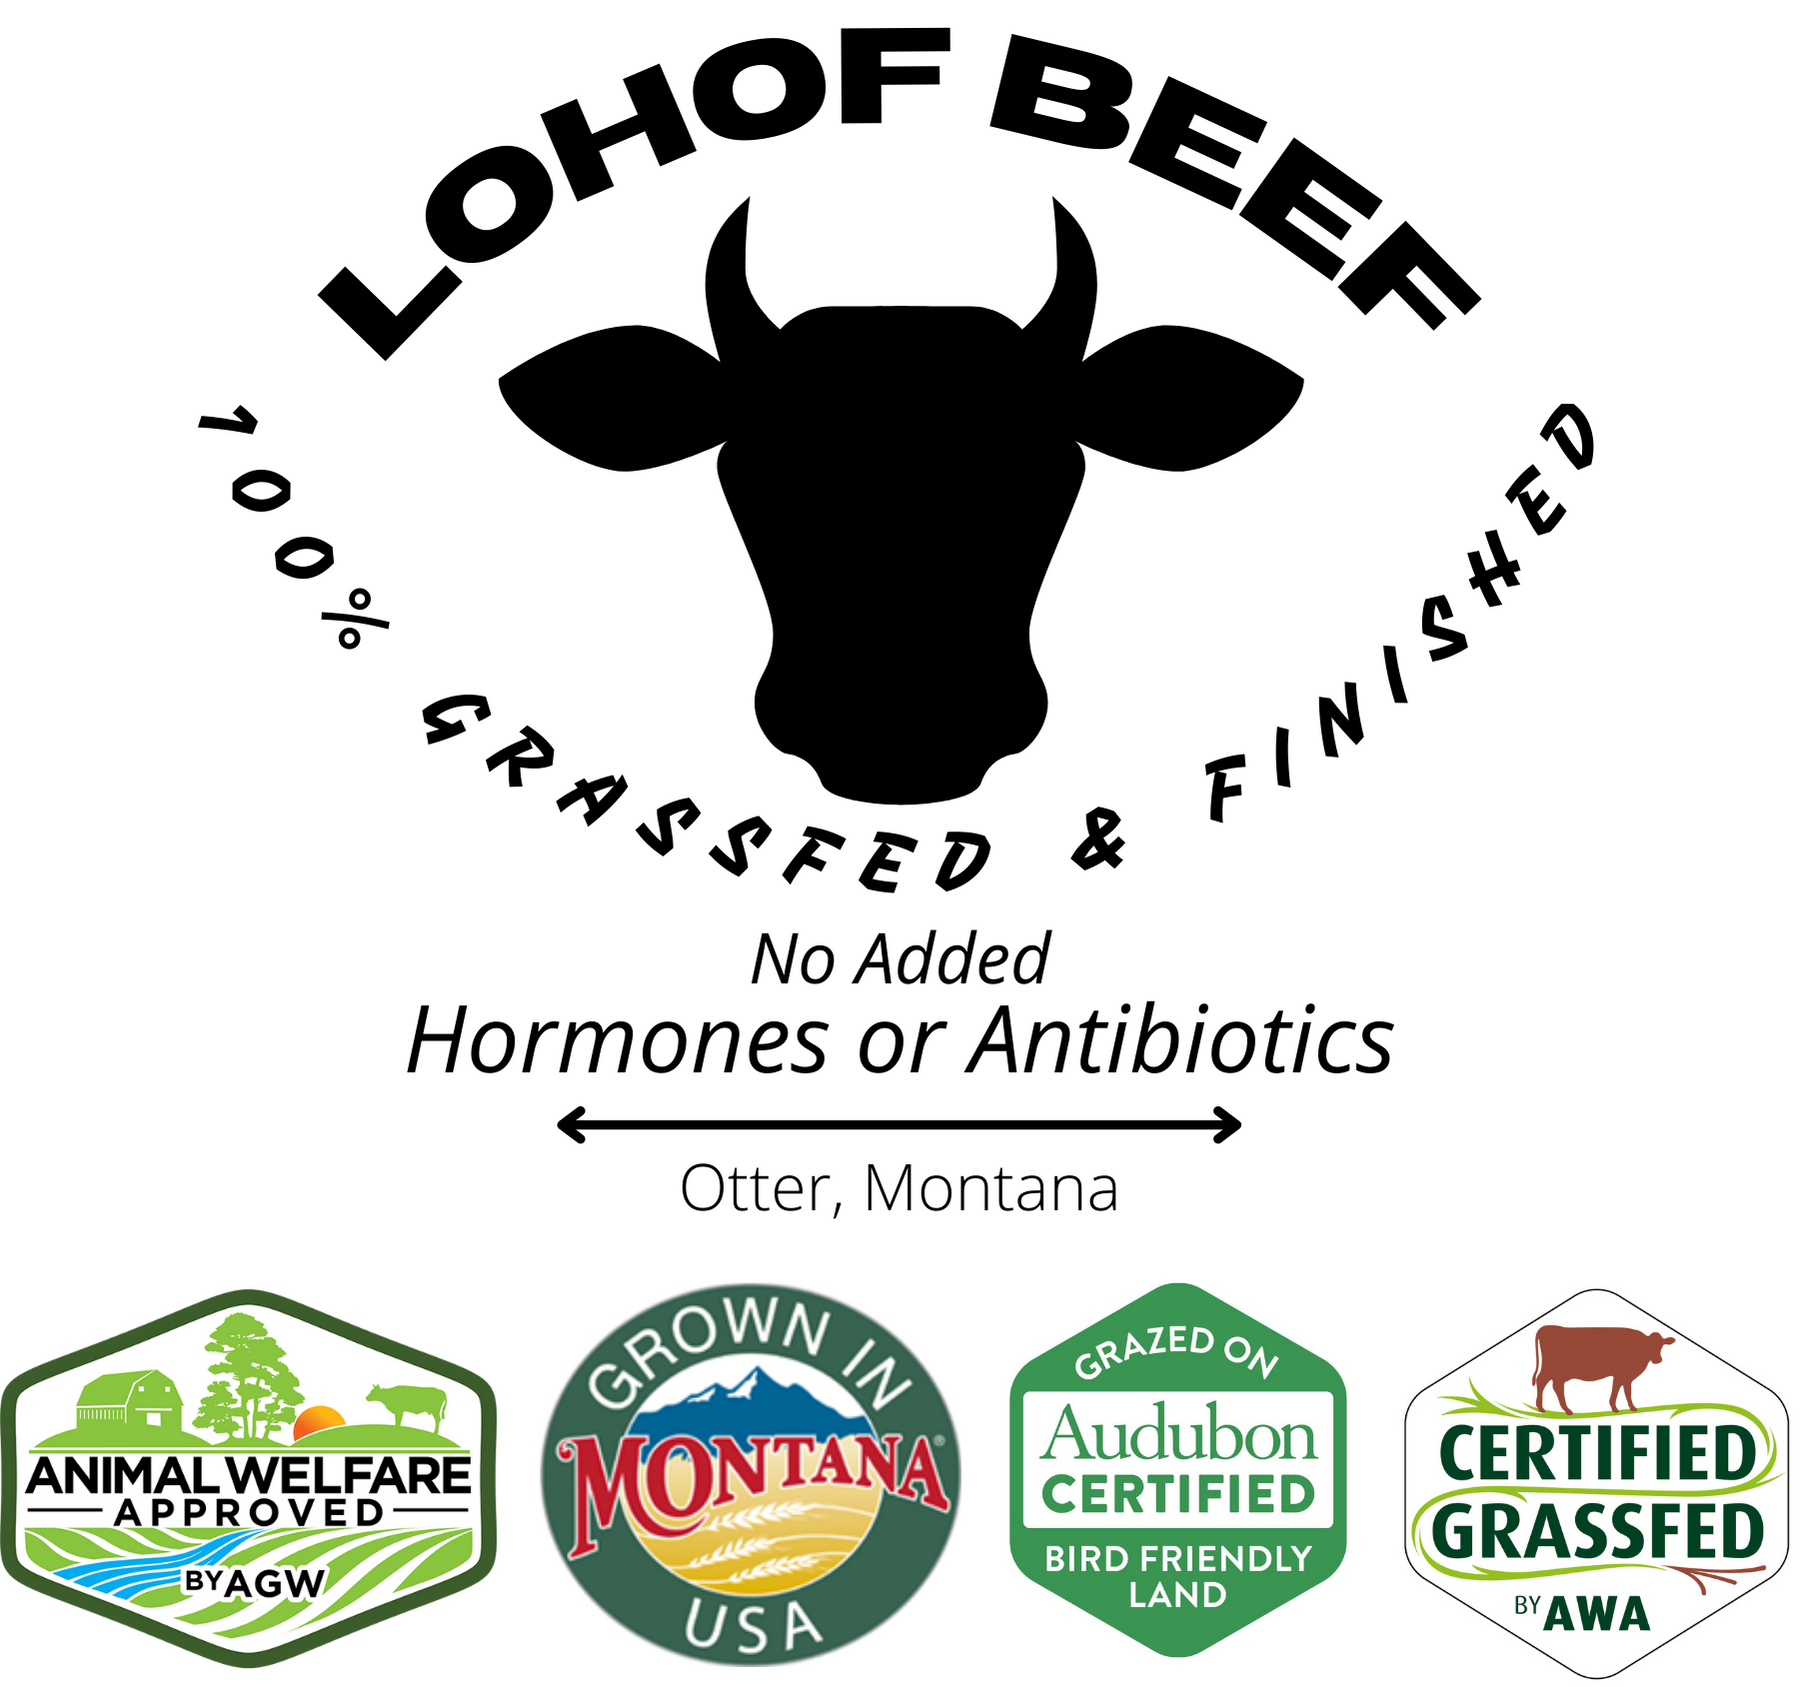 Lohof Beef logo